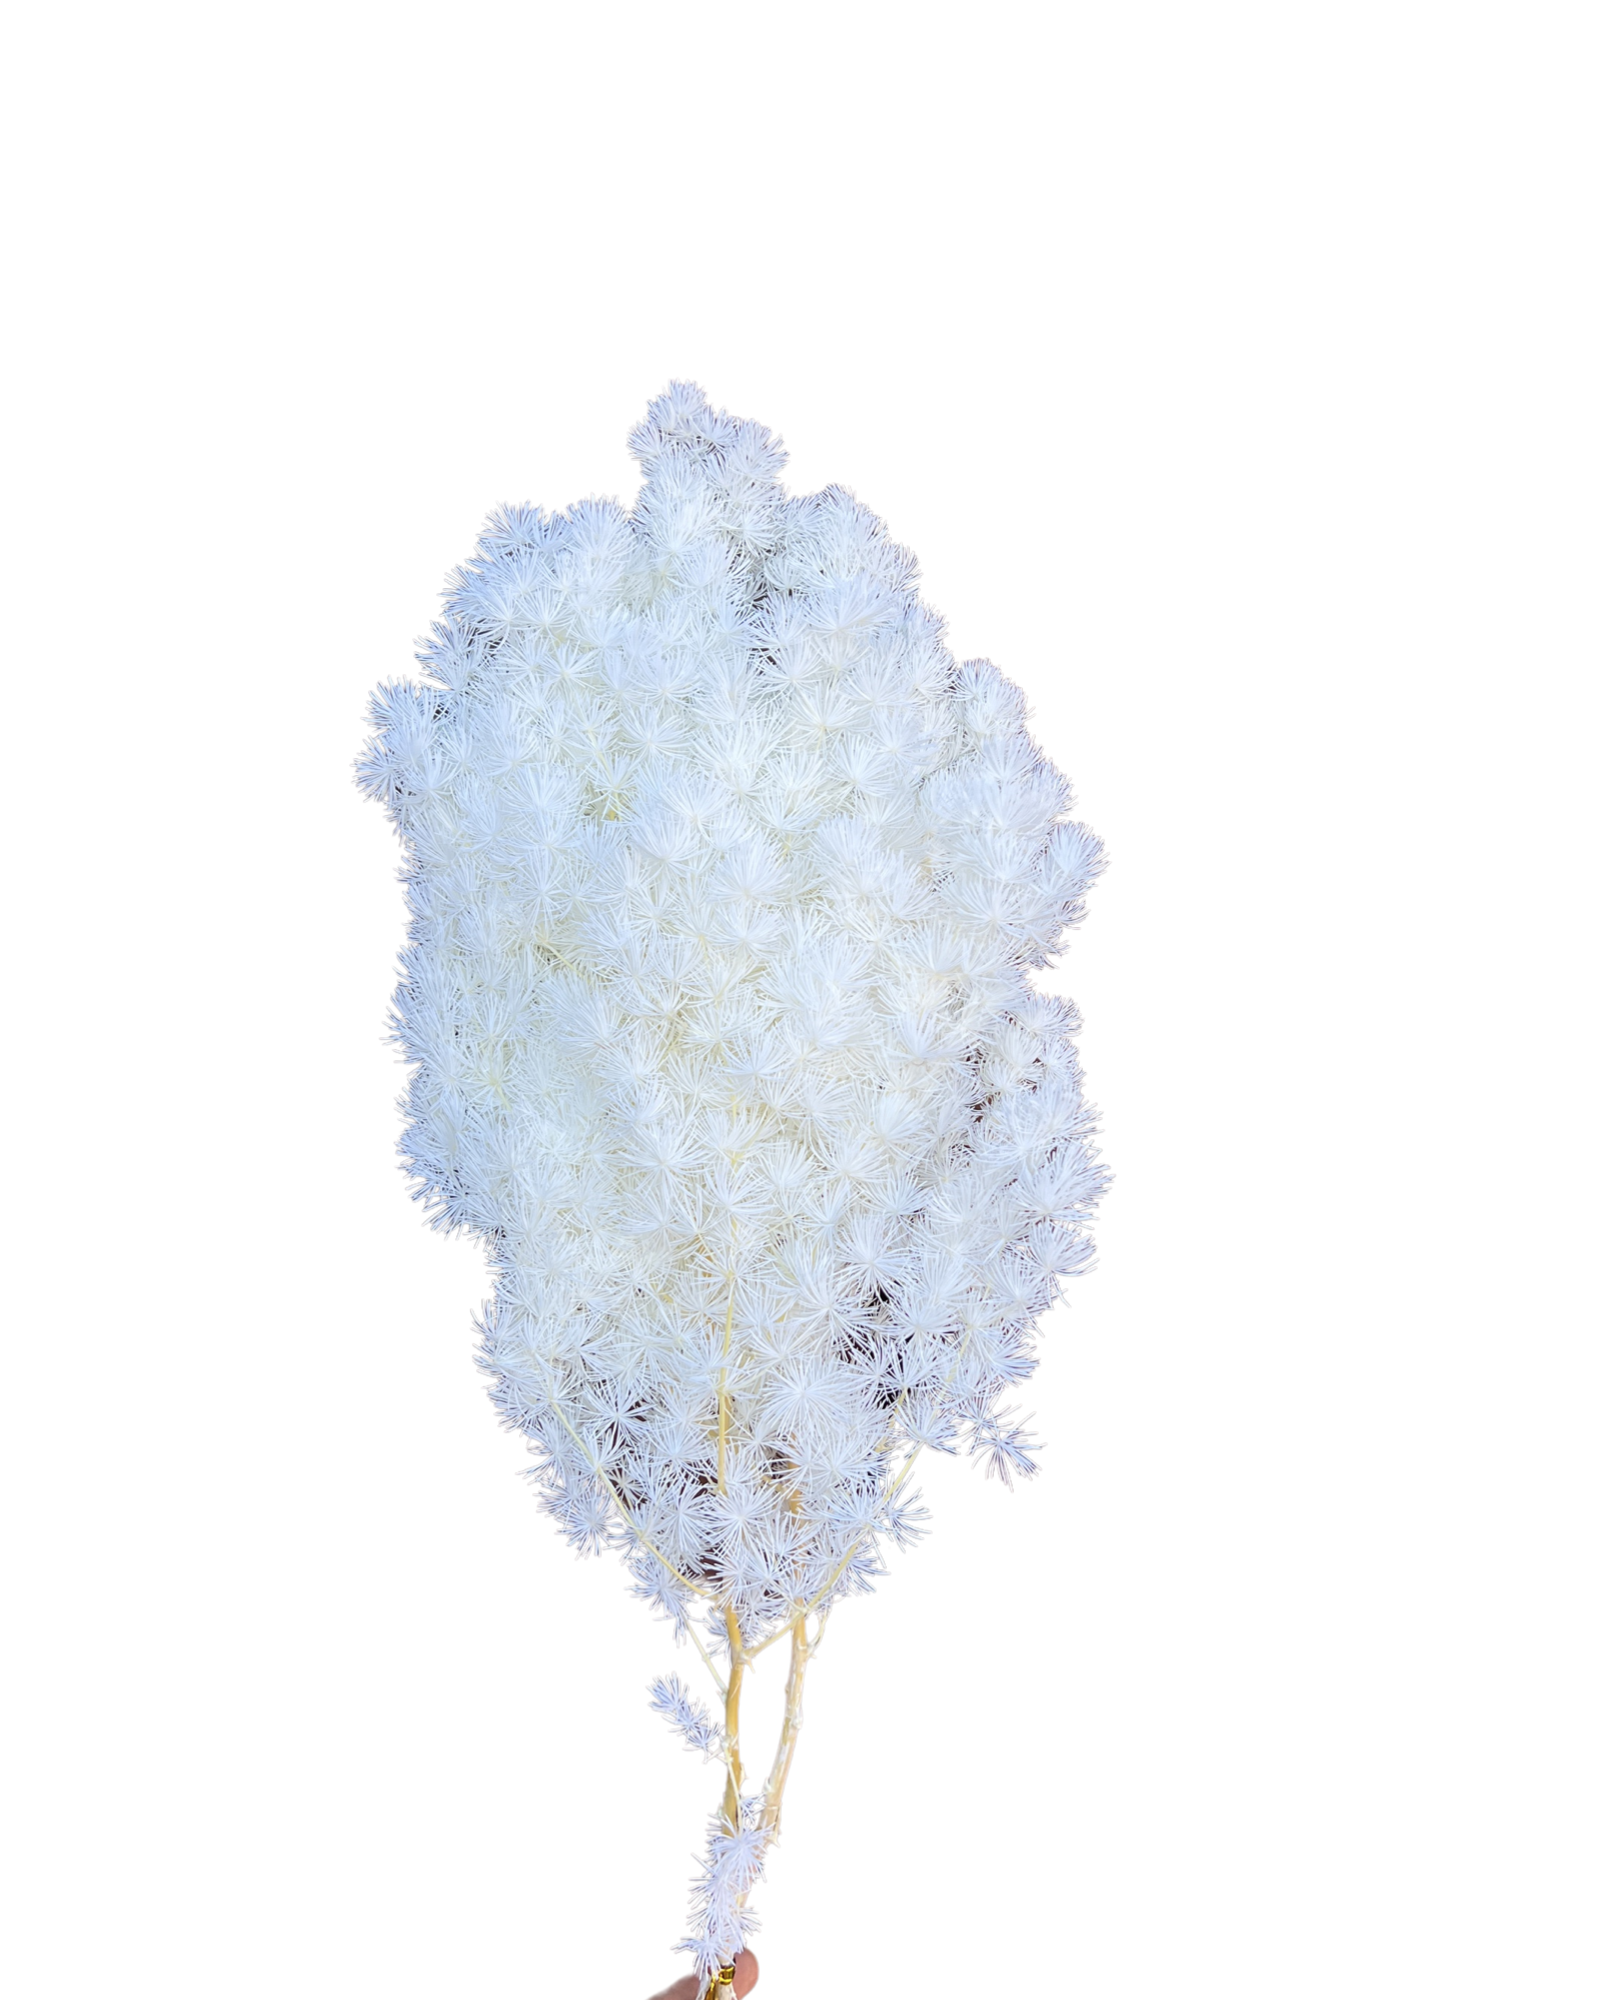 Ming fern(ASPARAGUS MYRIOCLADUS) - Off White